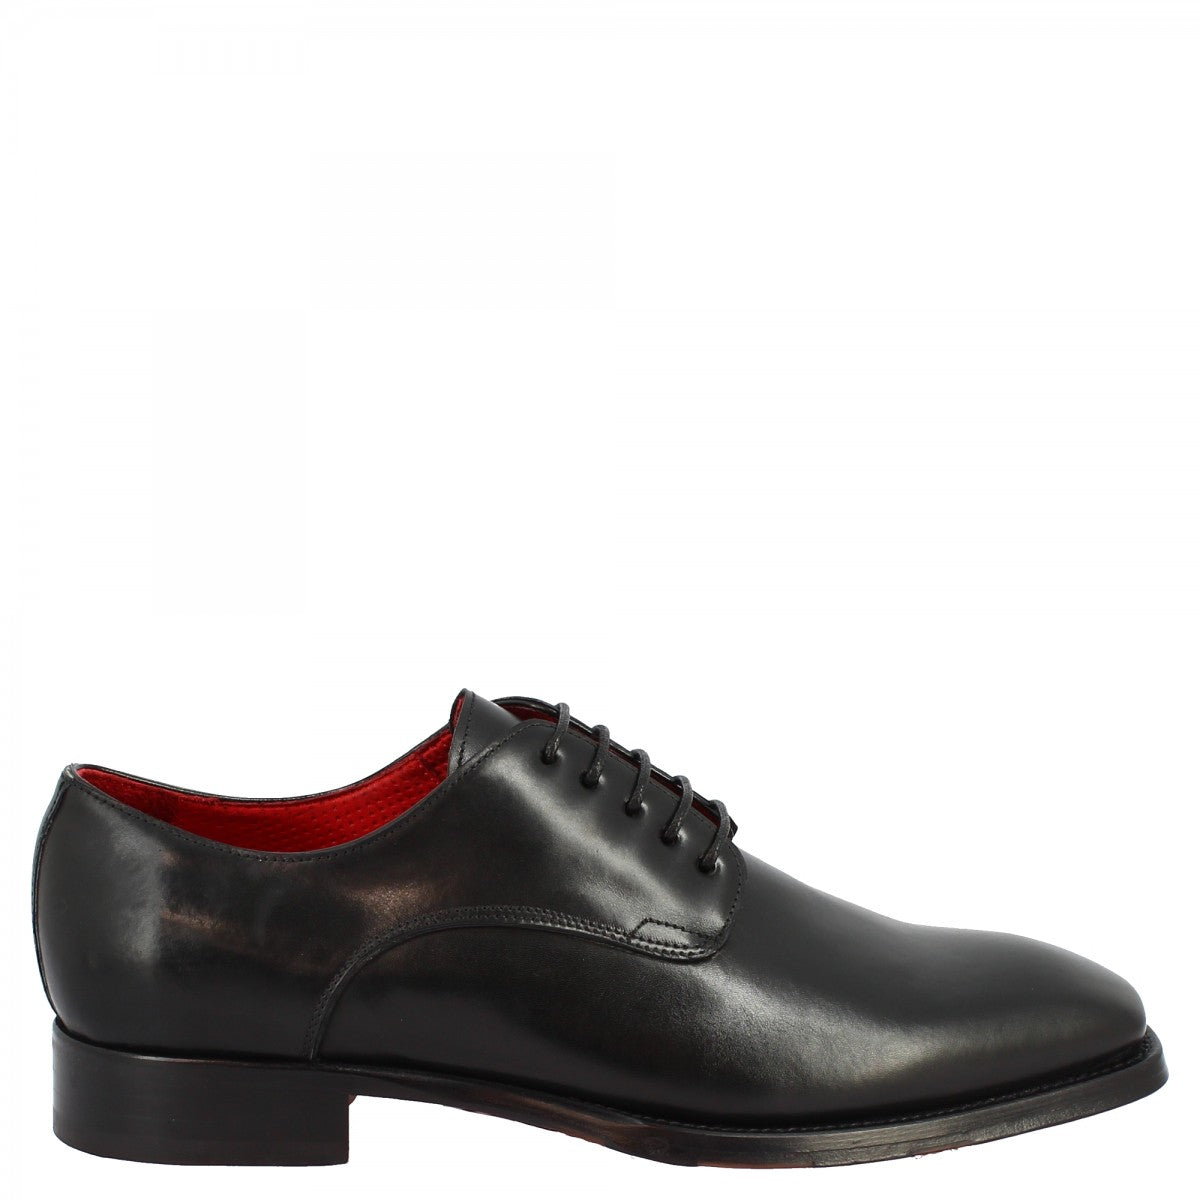 Elegant handmade men's brogues shoes in black leather